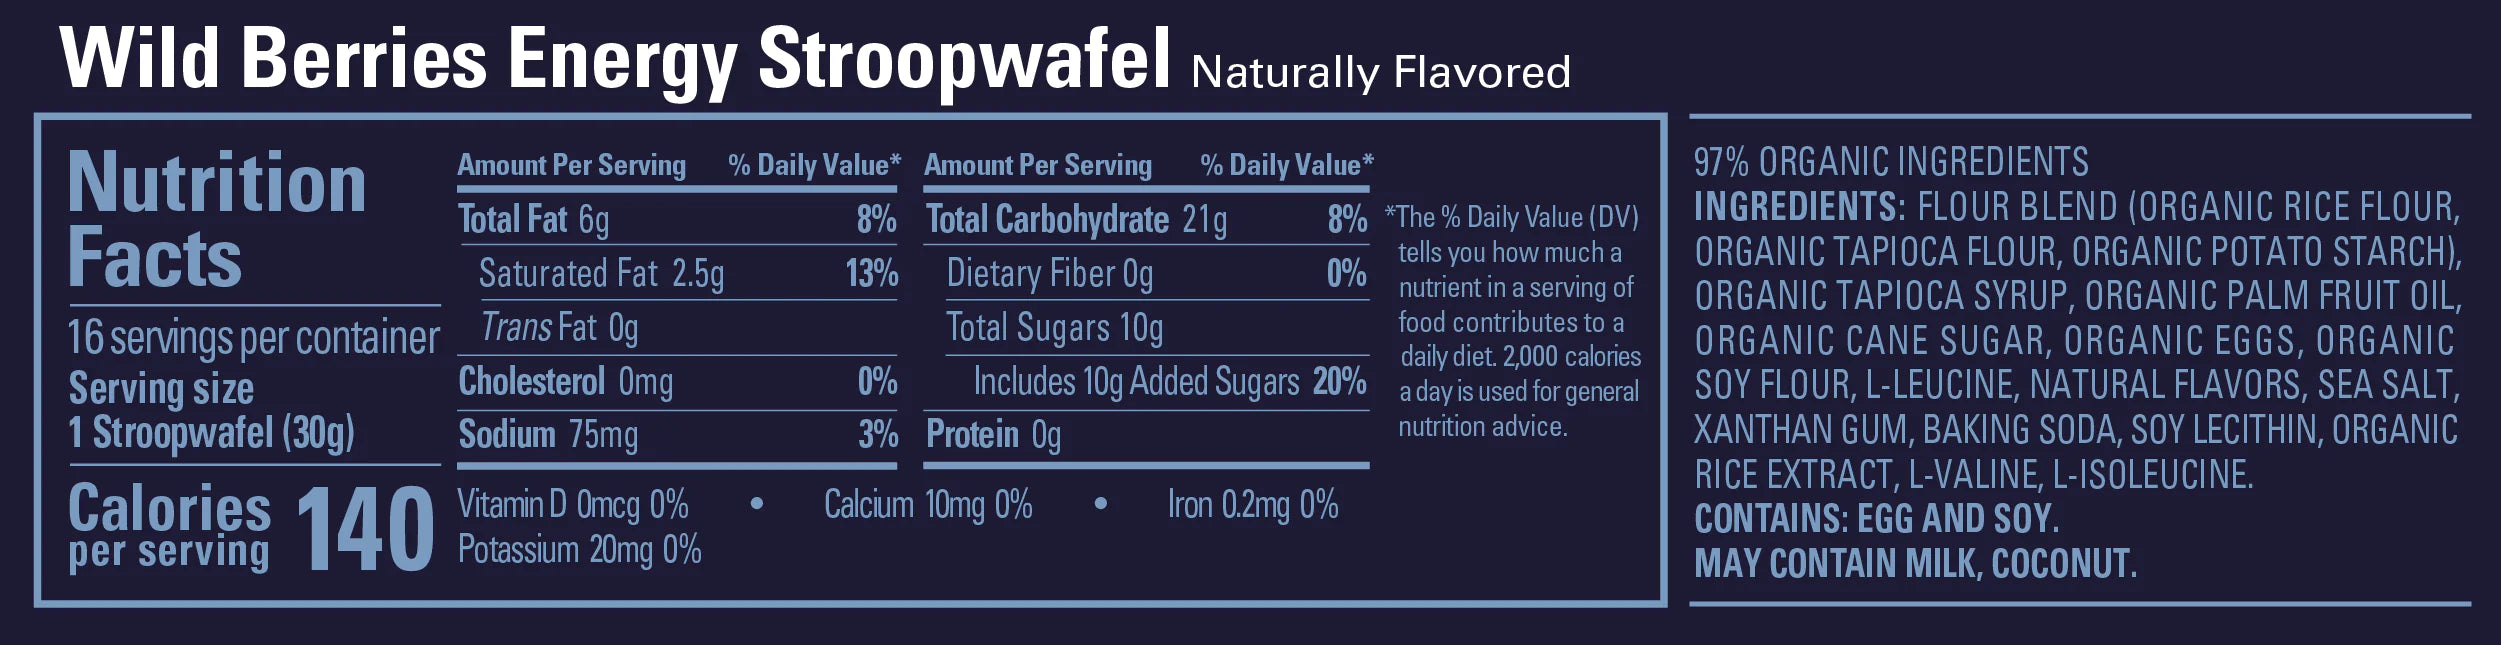 GU Energy - Stroopwafel - Wild Berries (Gluten Free) Nutritional Chart